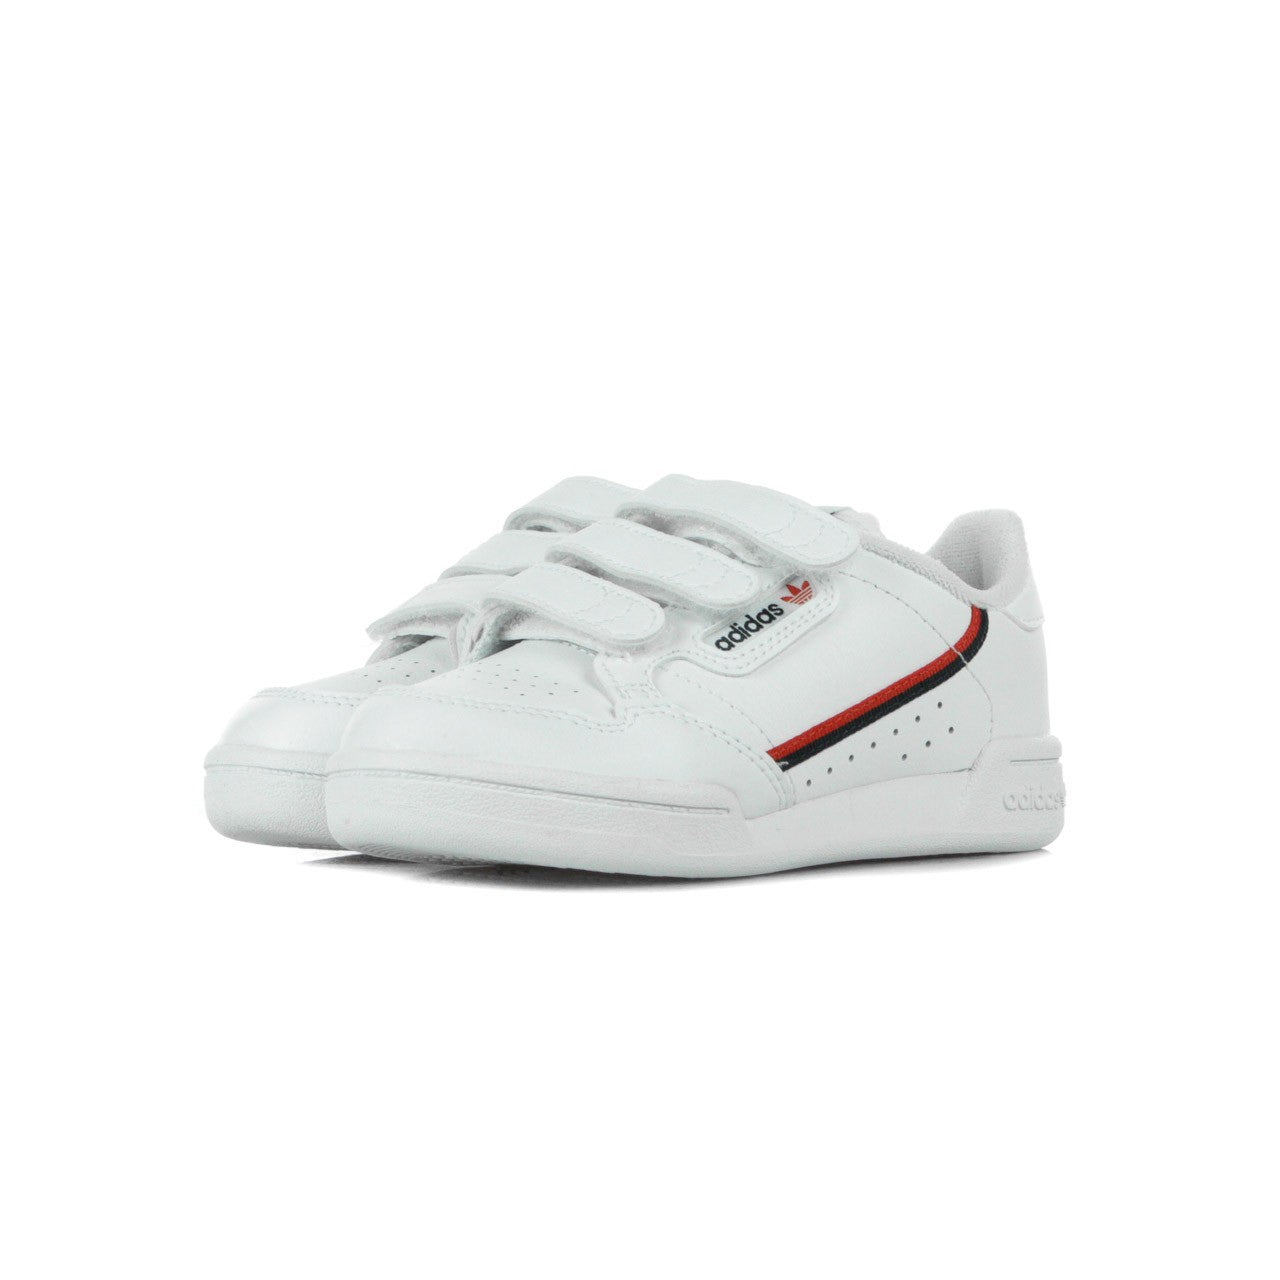 Adidas, Scarpa Bassa Bambino Continental 80 Cf C, 